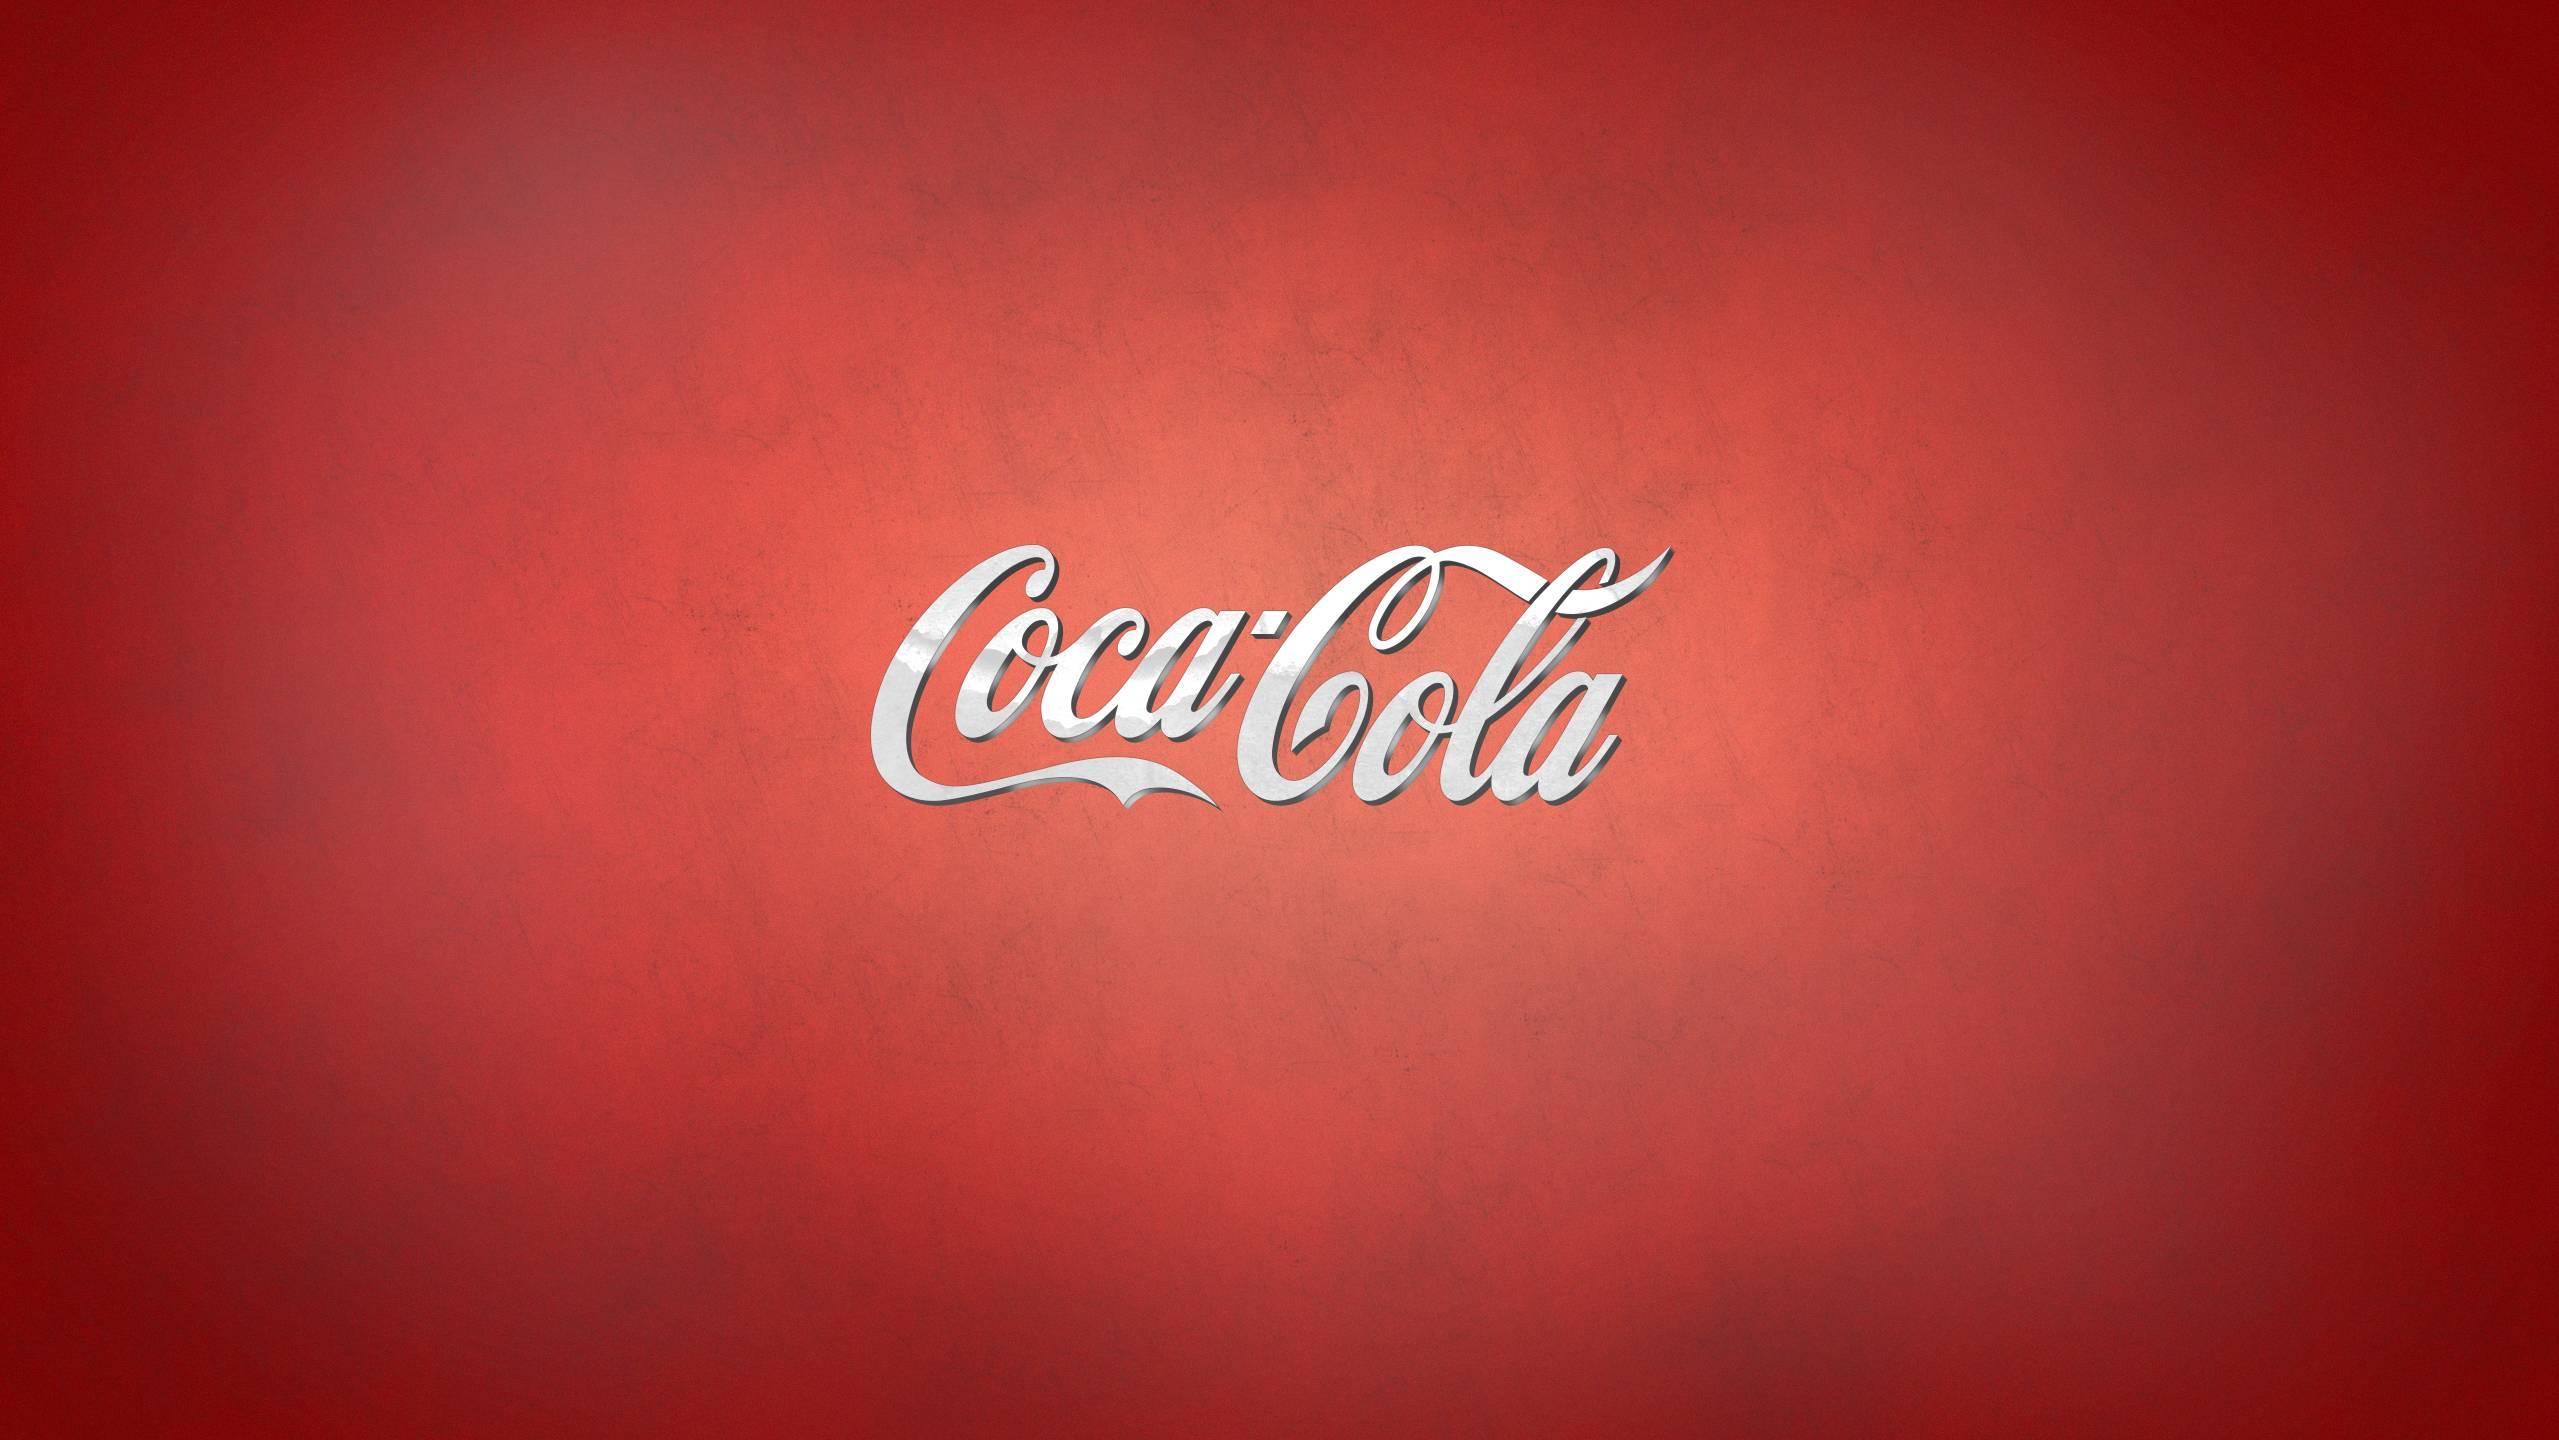 coca cola, brands, logos, background, red